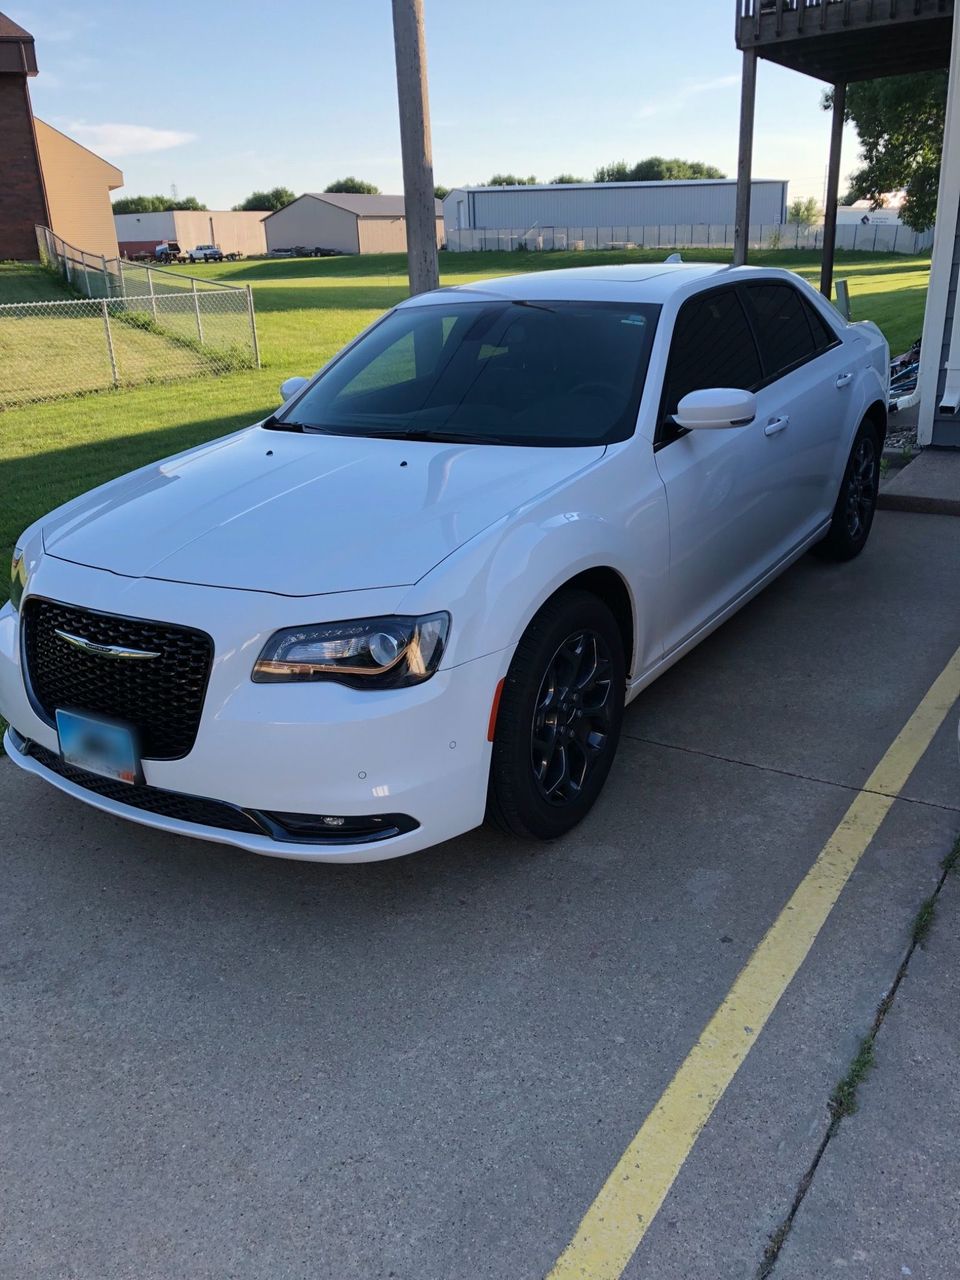 2018 Chrysler 300 S | Sioux Falls, SD, Bright White Clear Coat (White), All Wheel